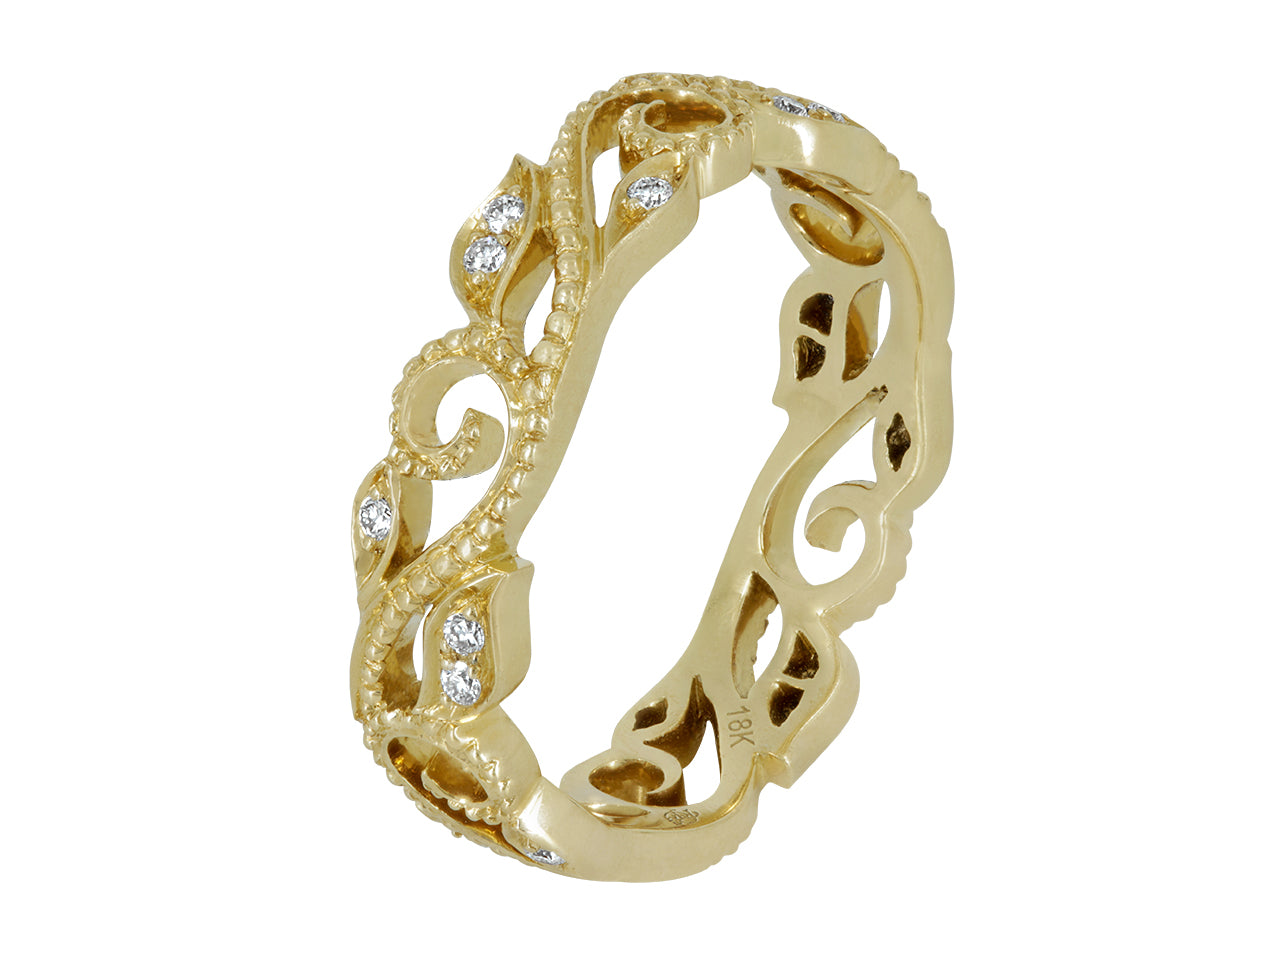 Rhonda Faber Green 'Vine' Diamond Ring in 18K Gold